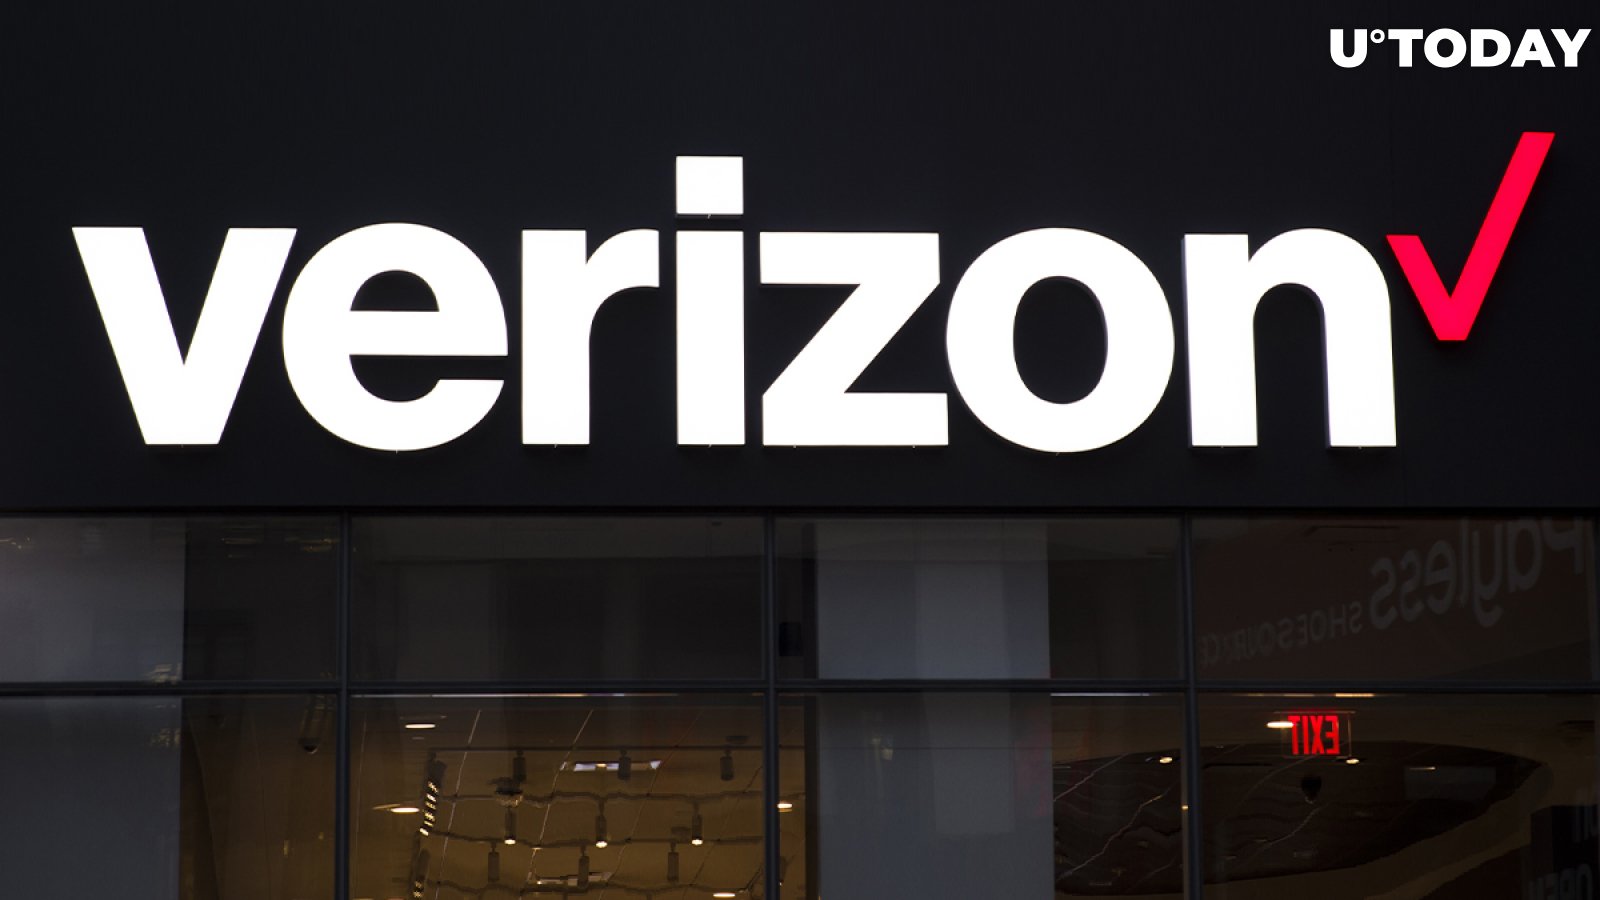 American Telecom Giant Verizon Implements Blockchain to Ensure News Transparency